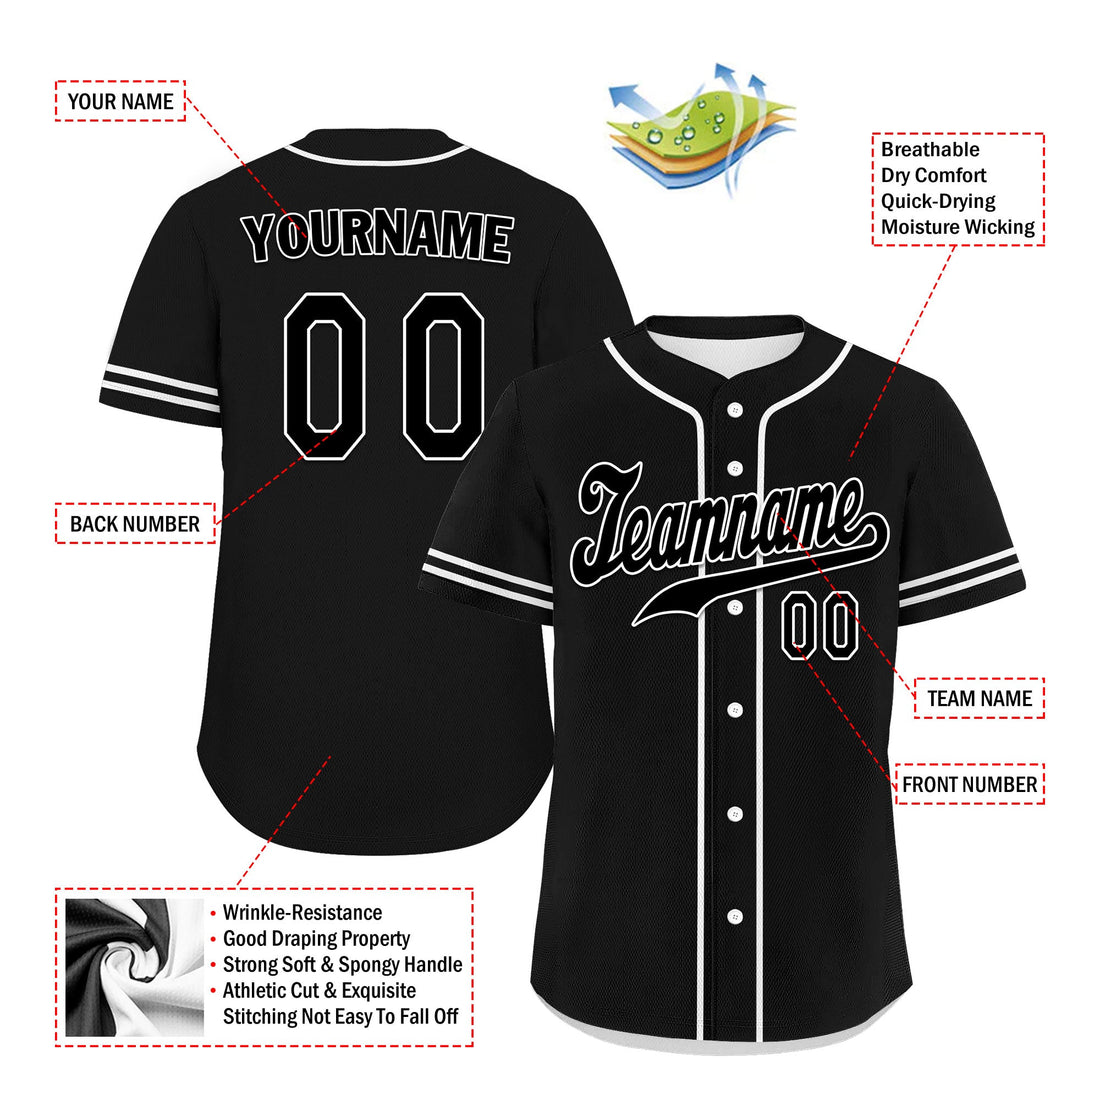 Custom Black Classic Style Black Personalized Authentic Baseball Jersey UN002-bd0b00d8-c0